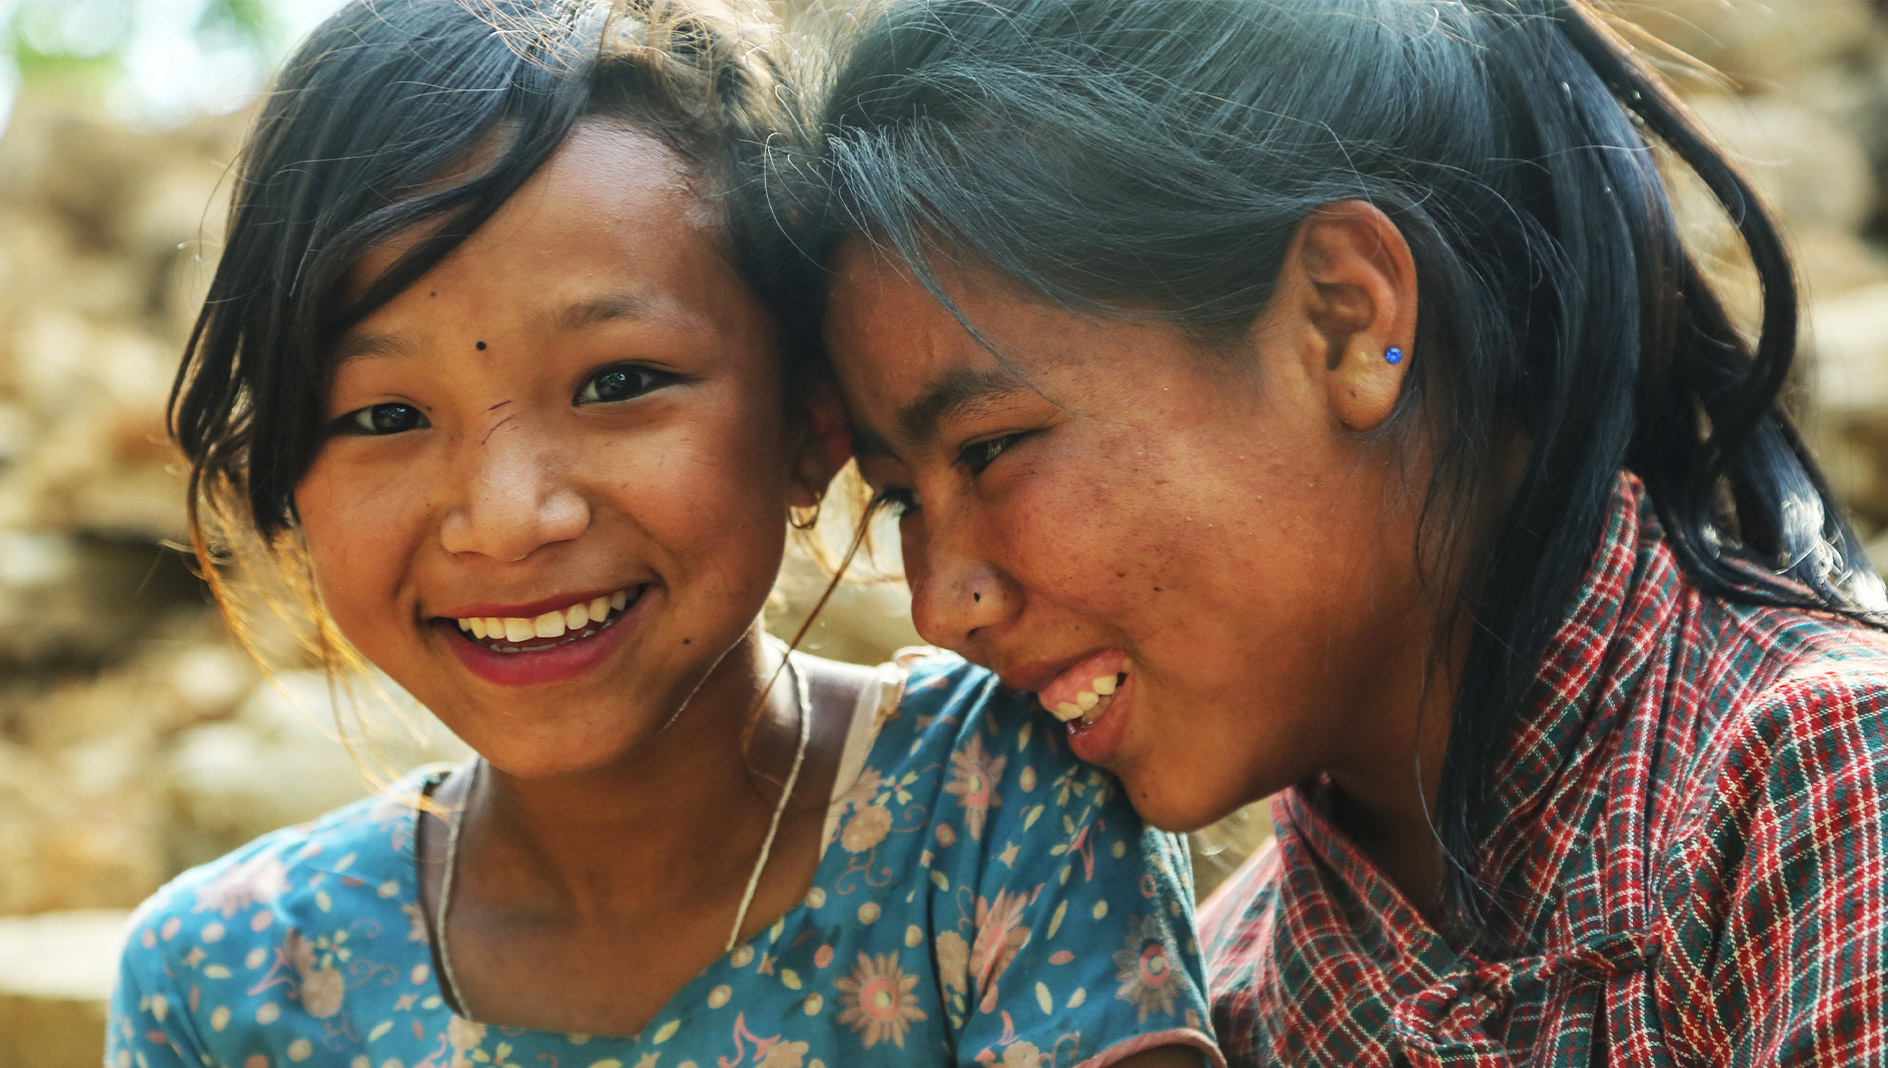 Adozioni ragazzi in Nepal